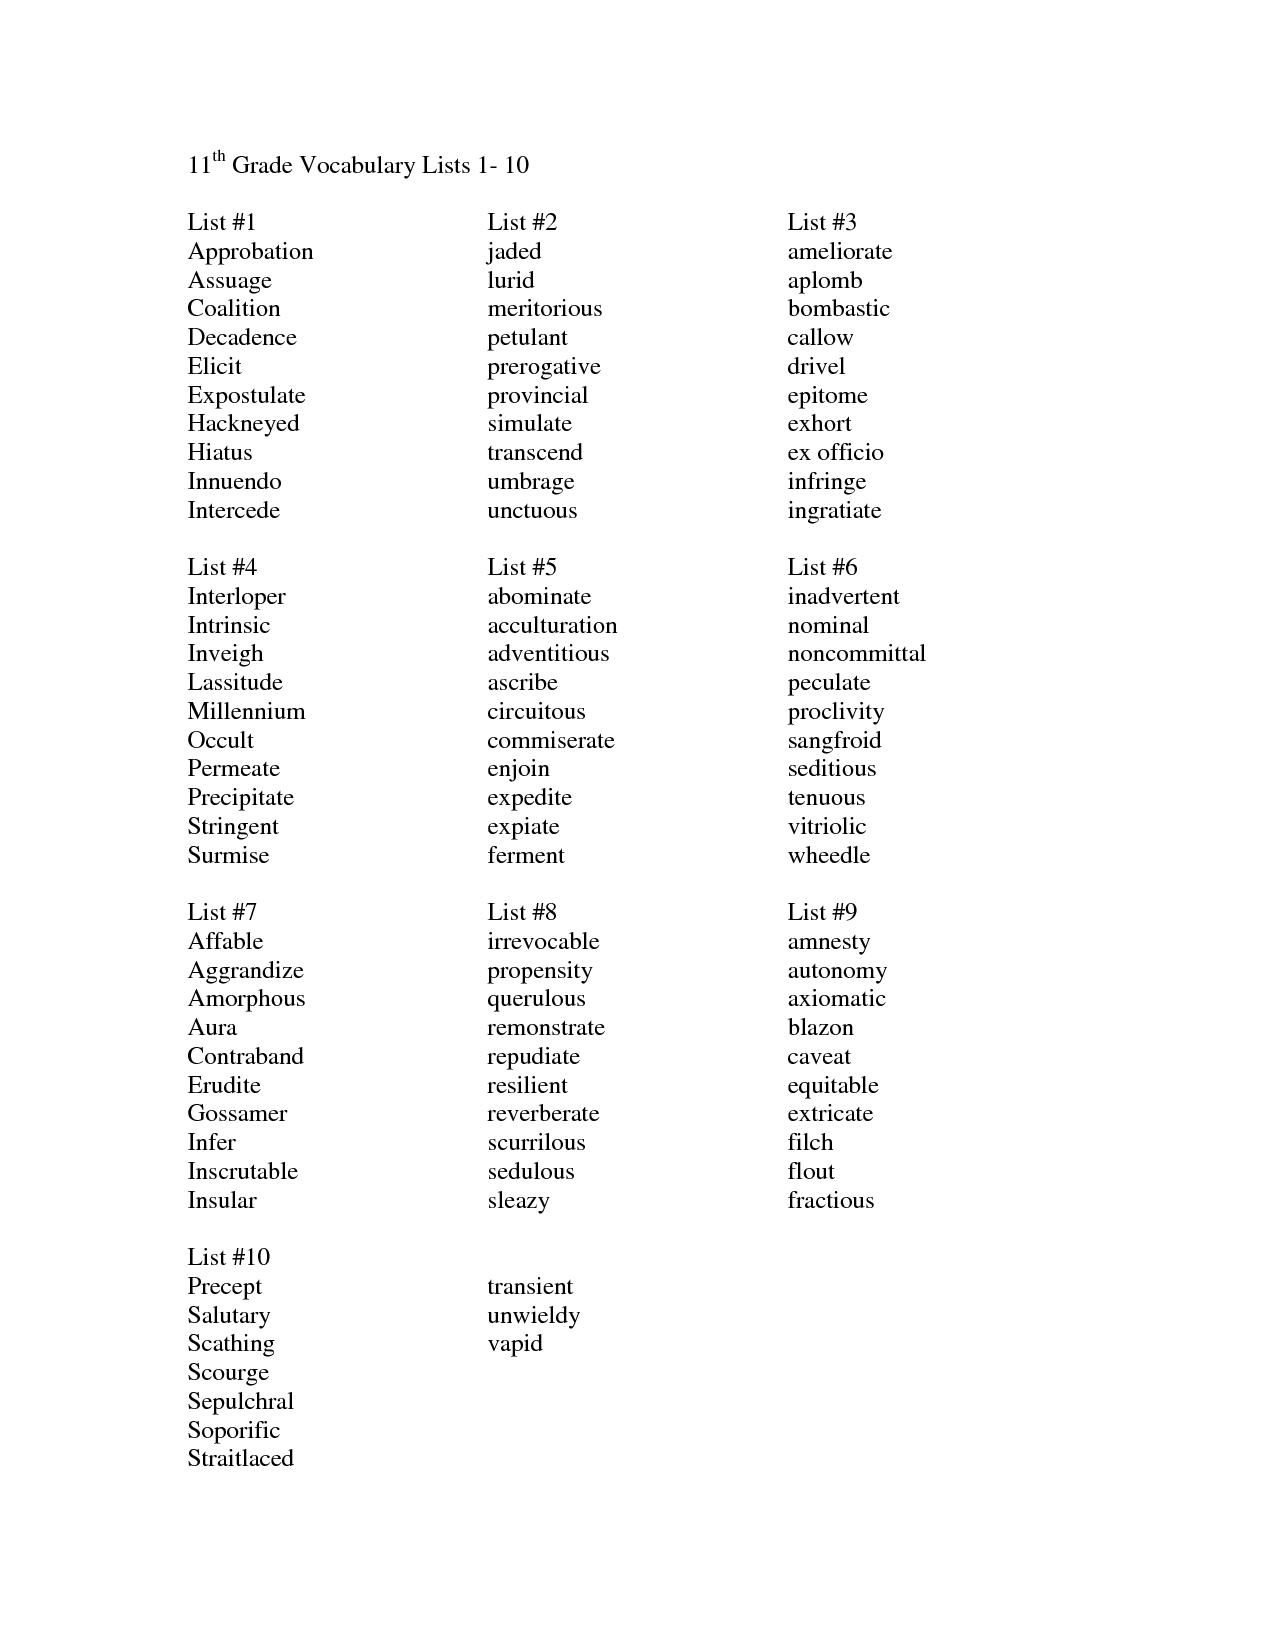 11th Grade Vocabulary Word List Image